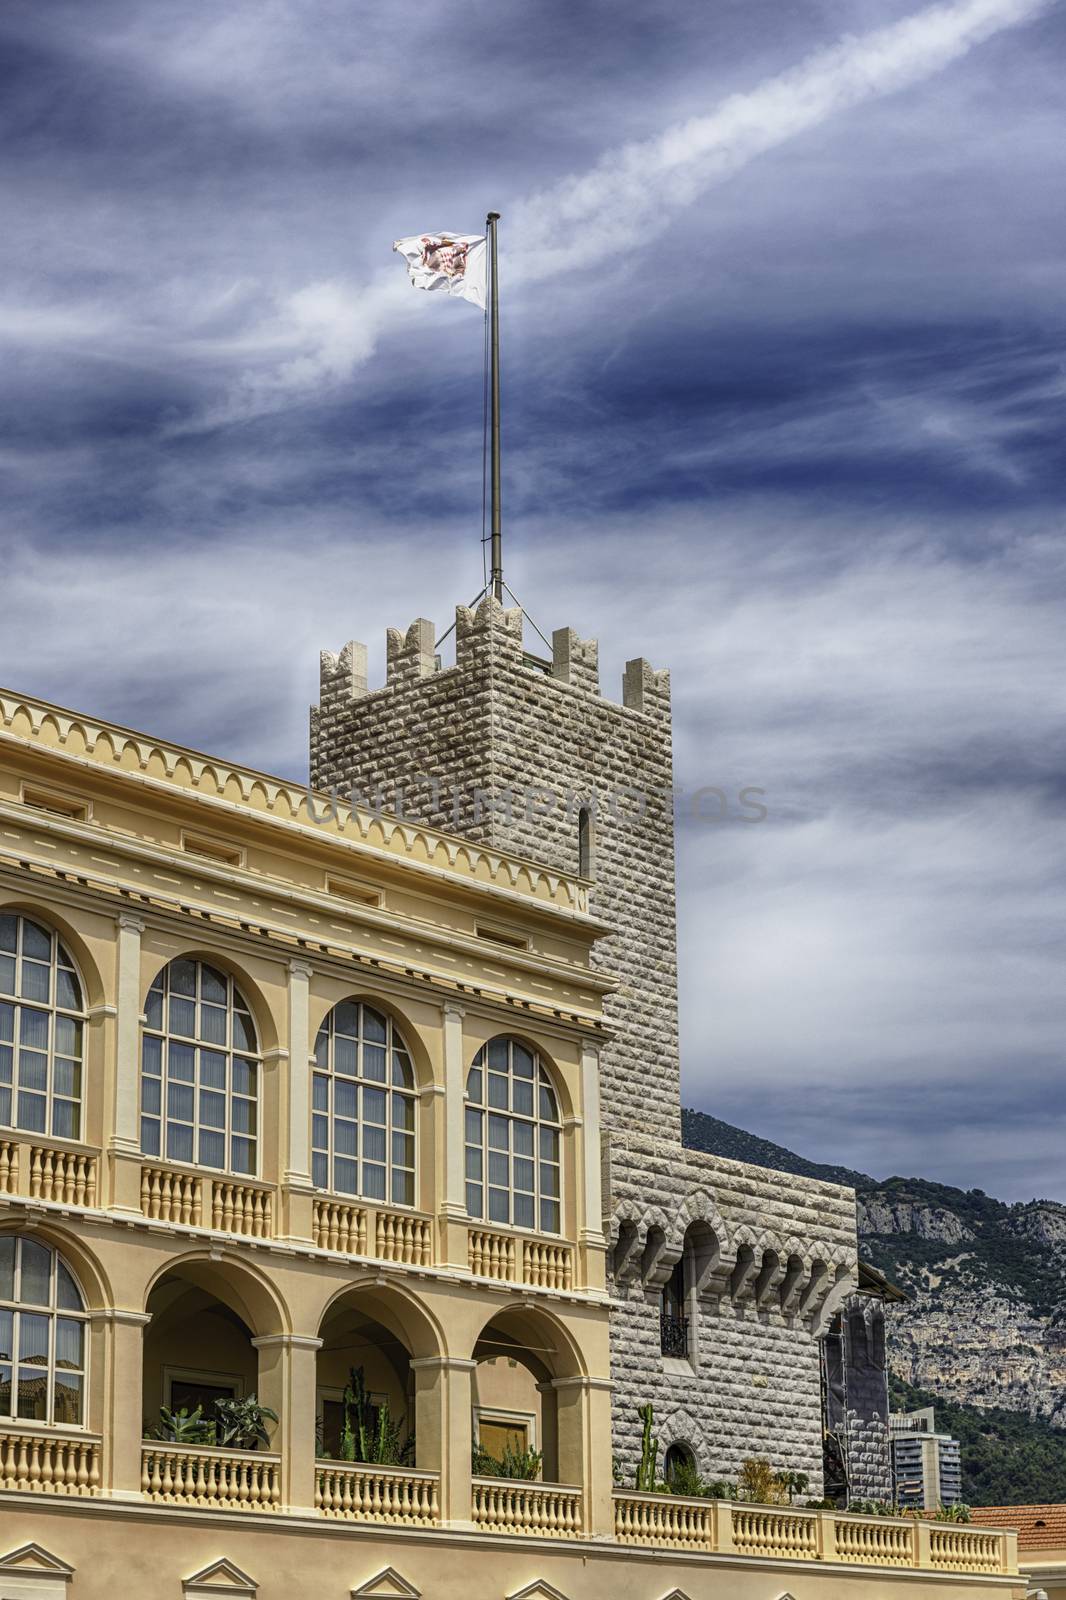 Detail of Prince's Palace of Monaco, old town, Monaco City by marcorubino